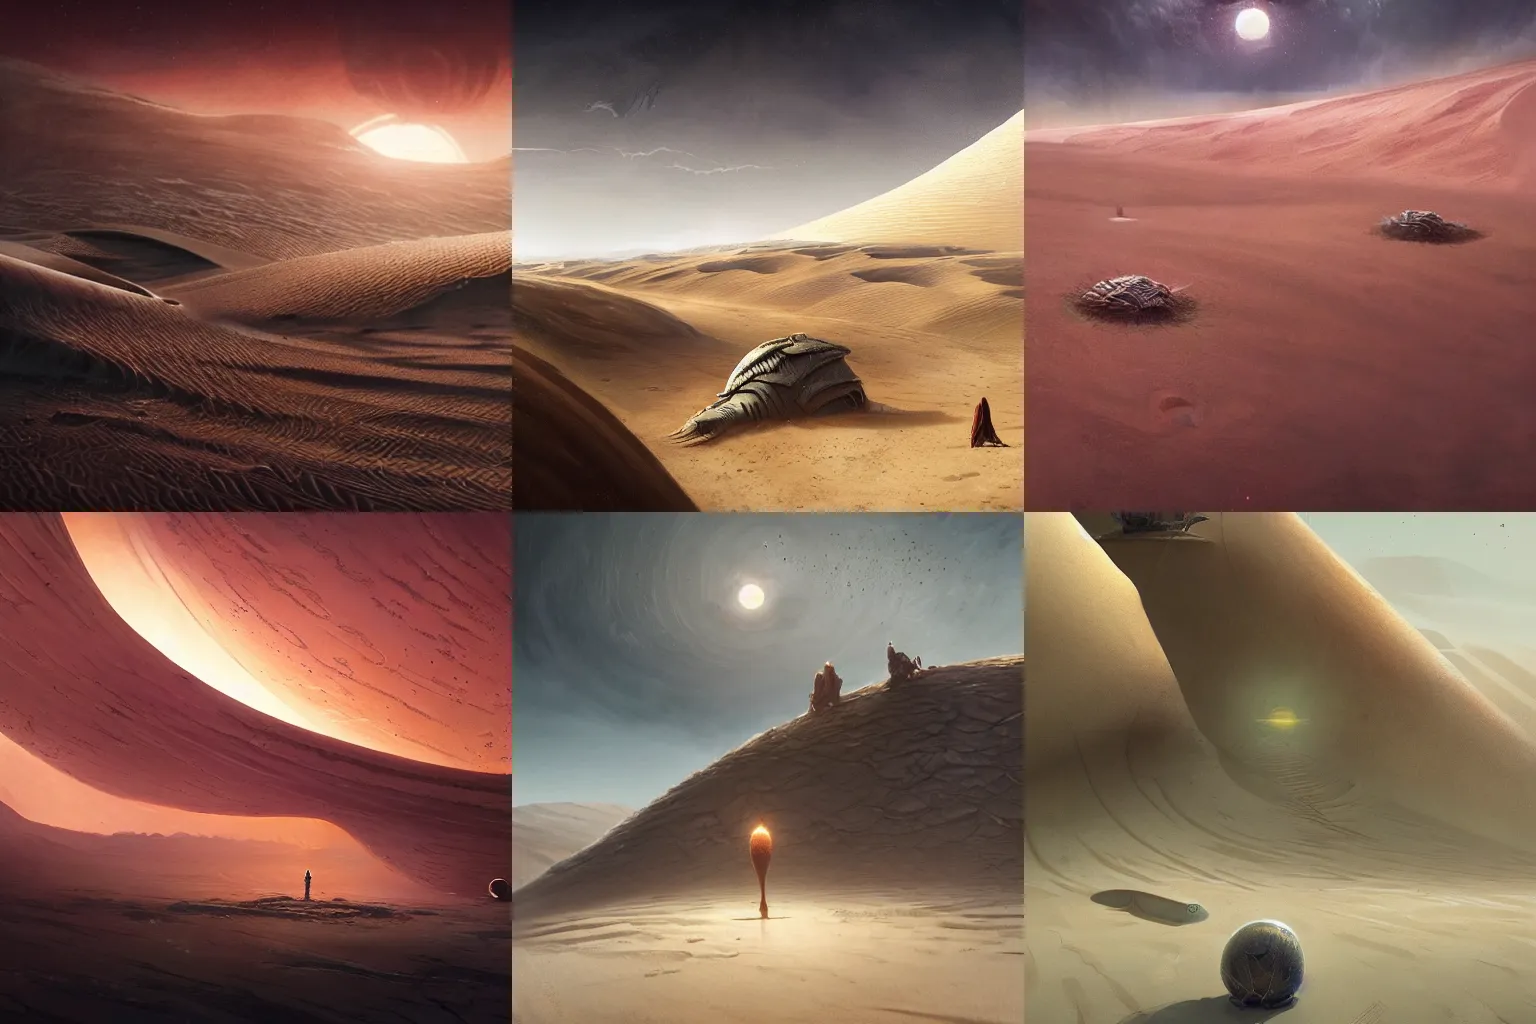 Prompt: dune planet, wanderer eaten by worm, highly detailed, sharp, 4k, award winning art by greg rutkowski